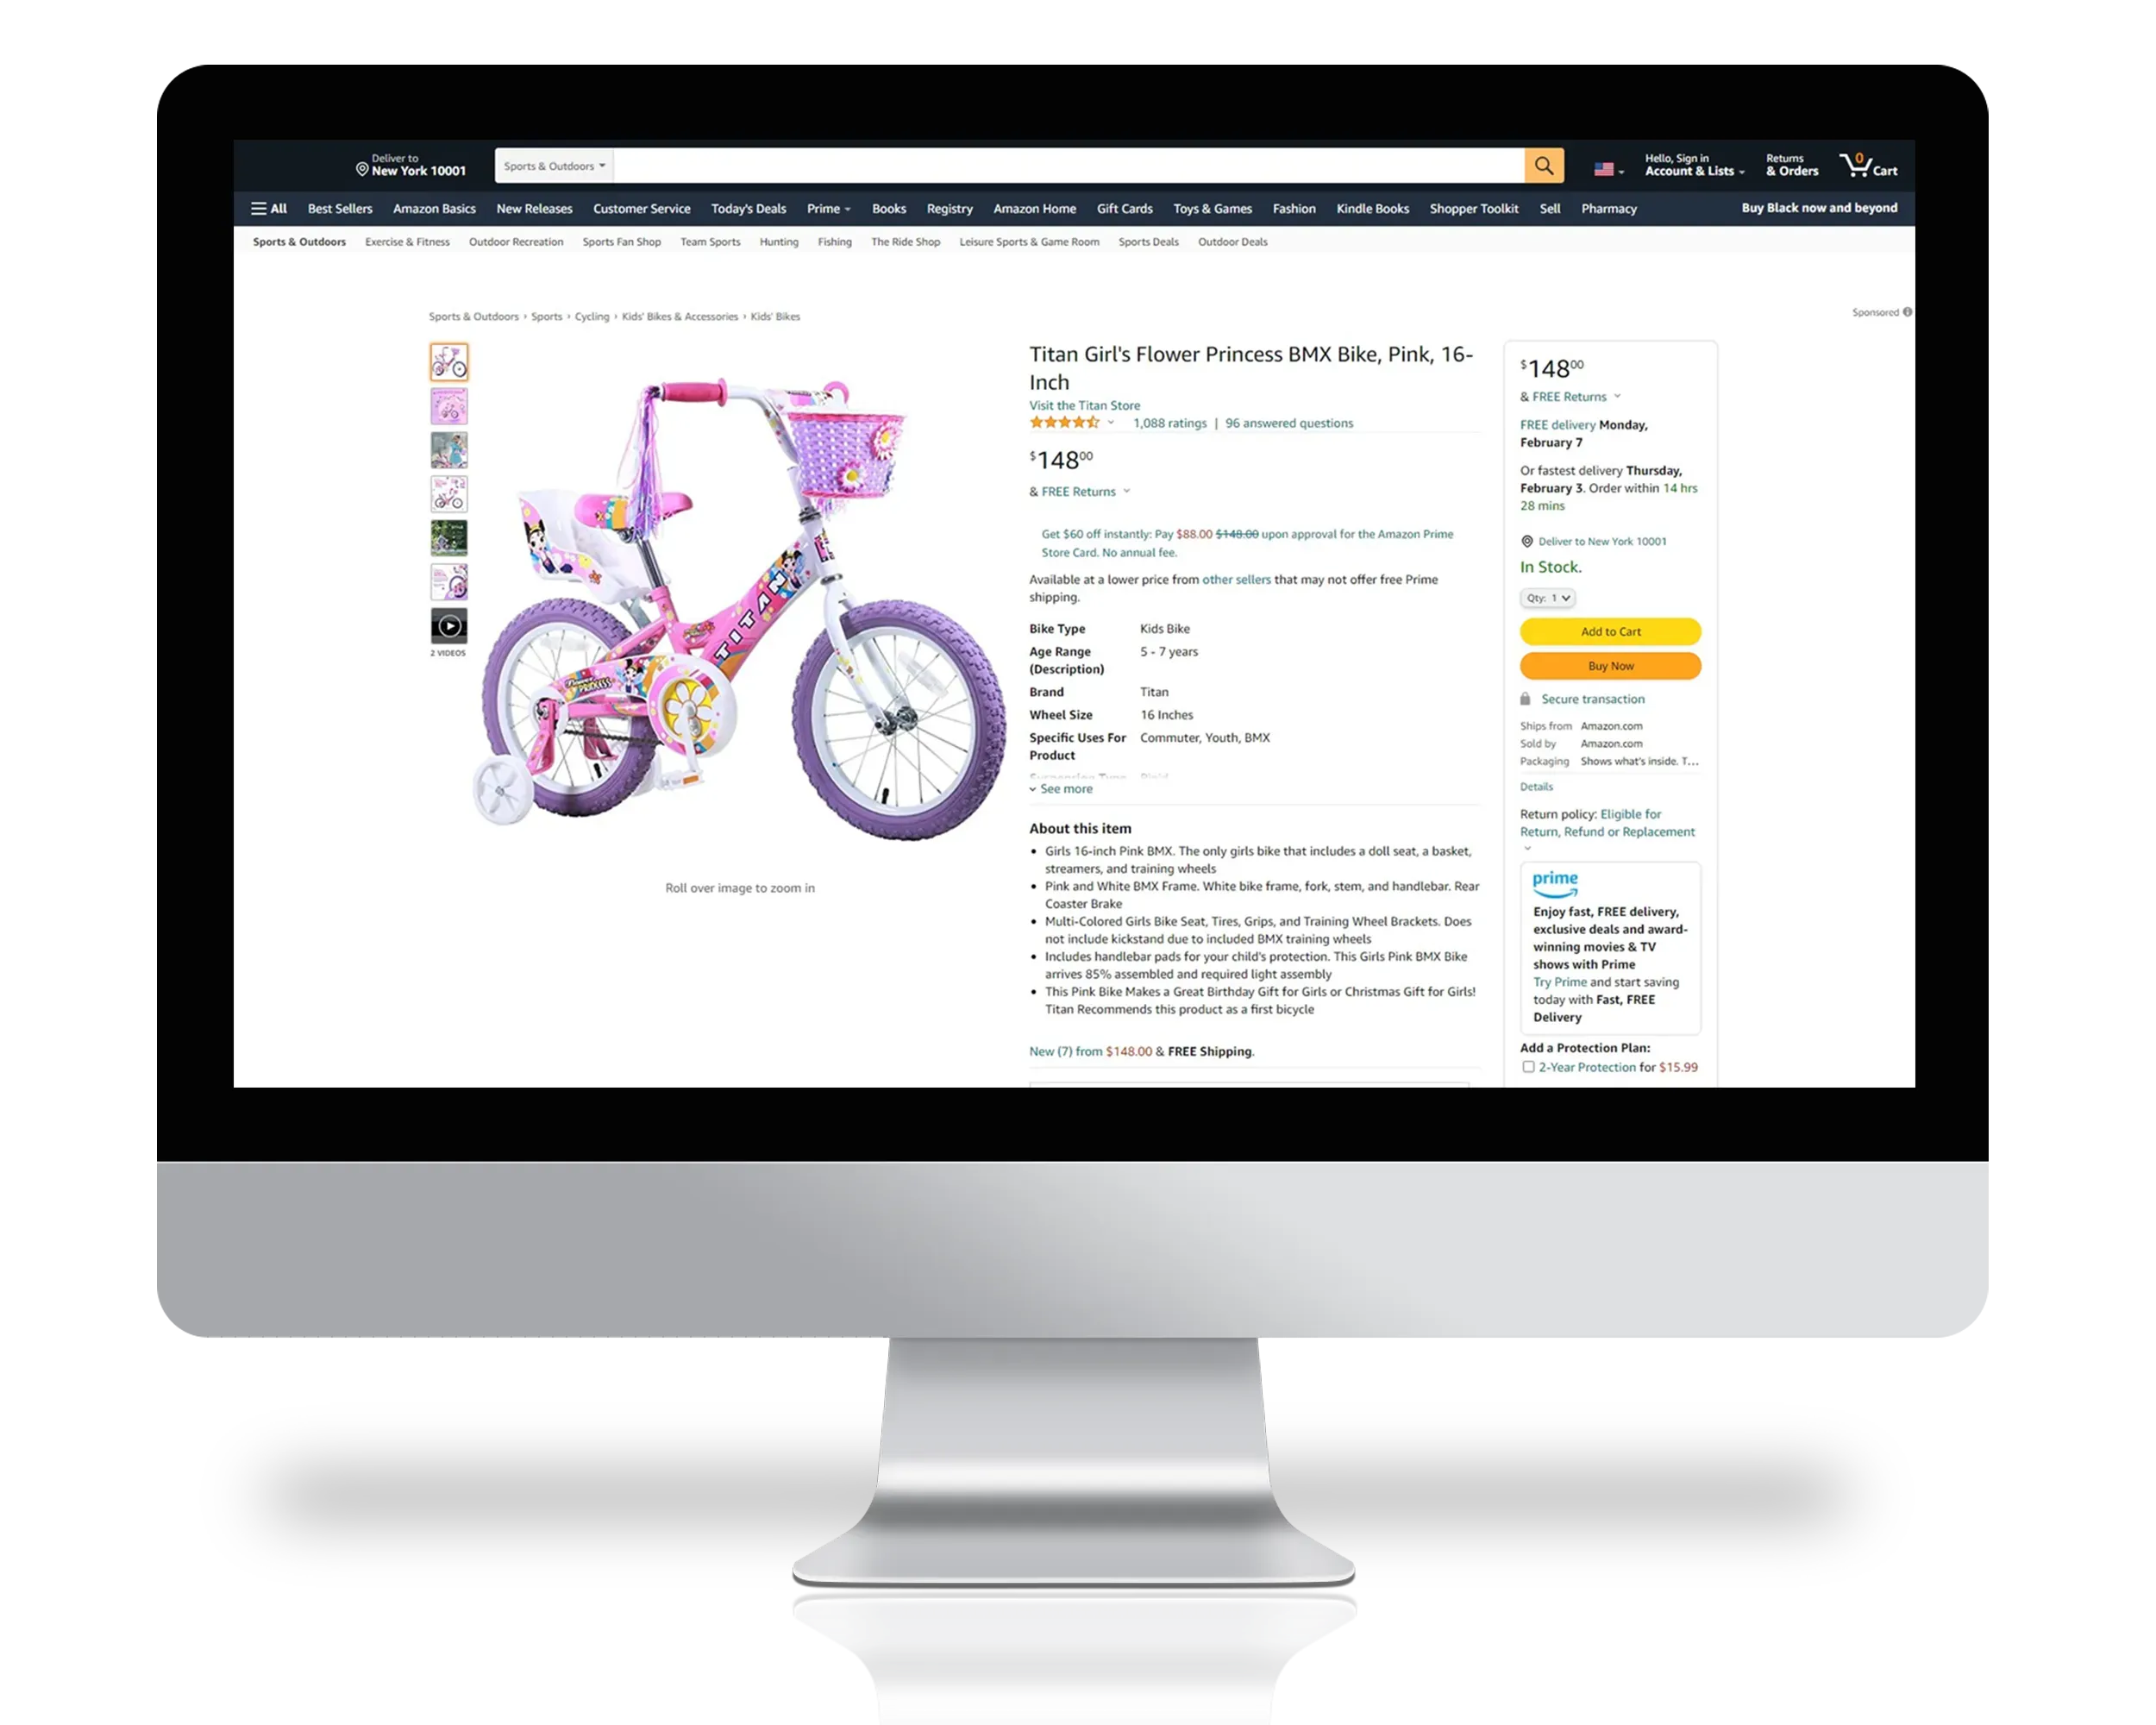 Amazon product page of Girl's flower princess BMX bike